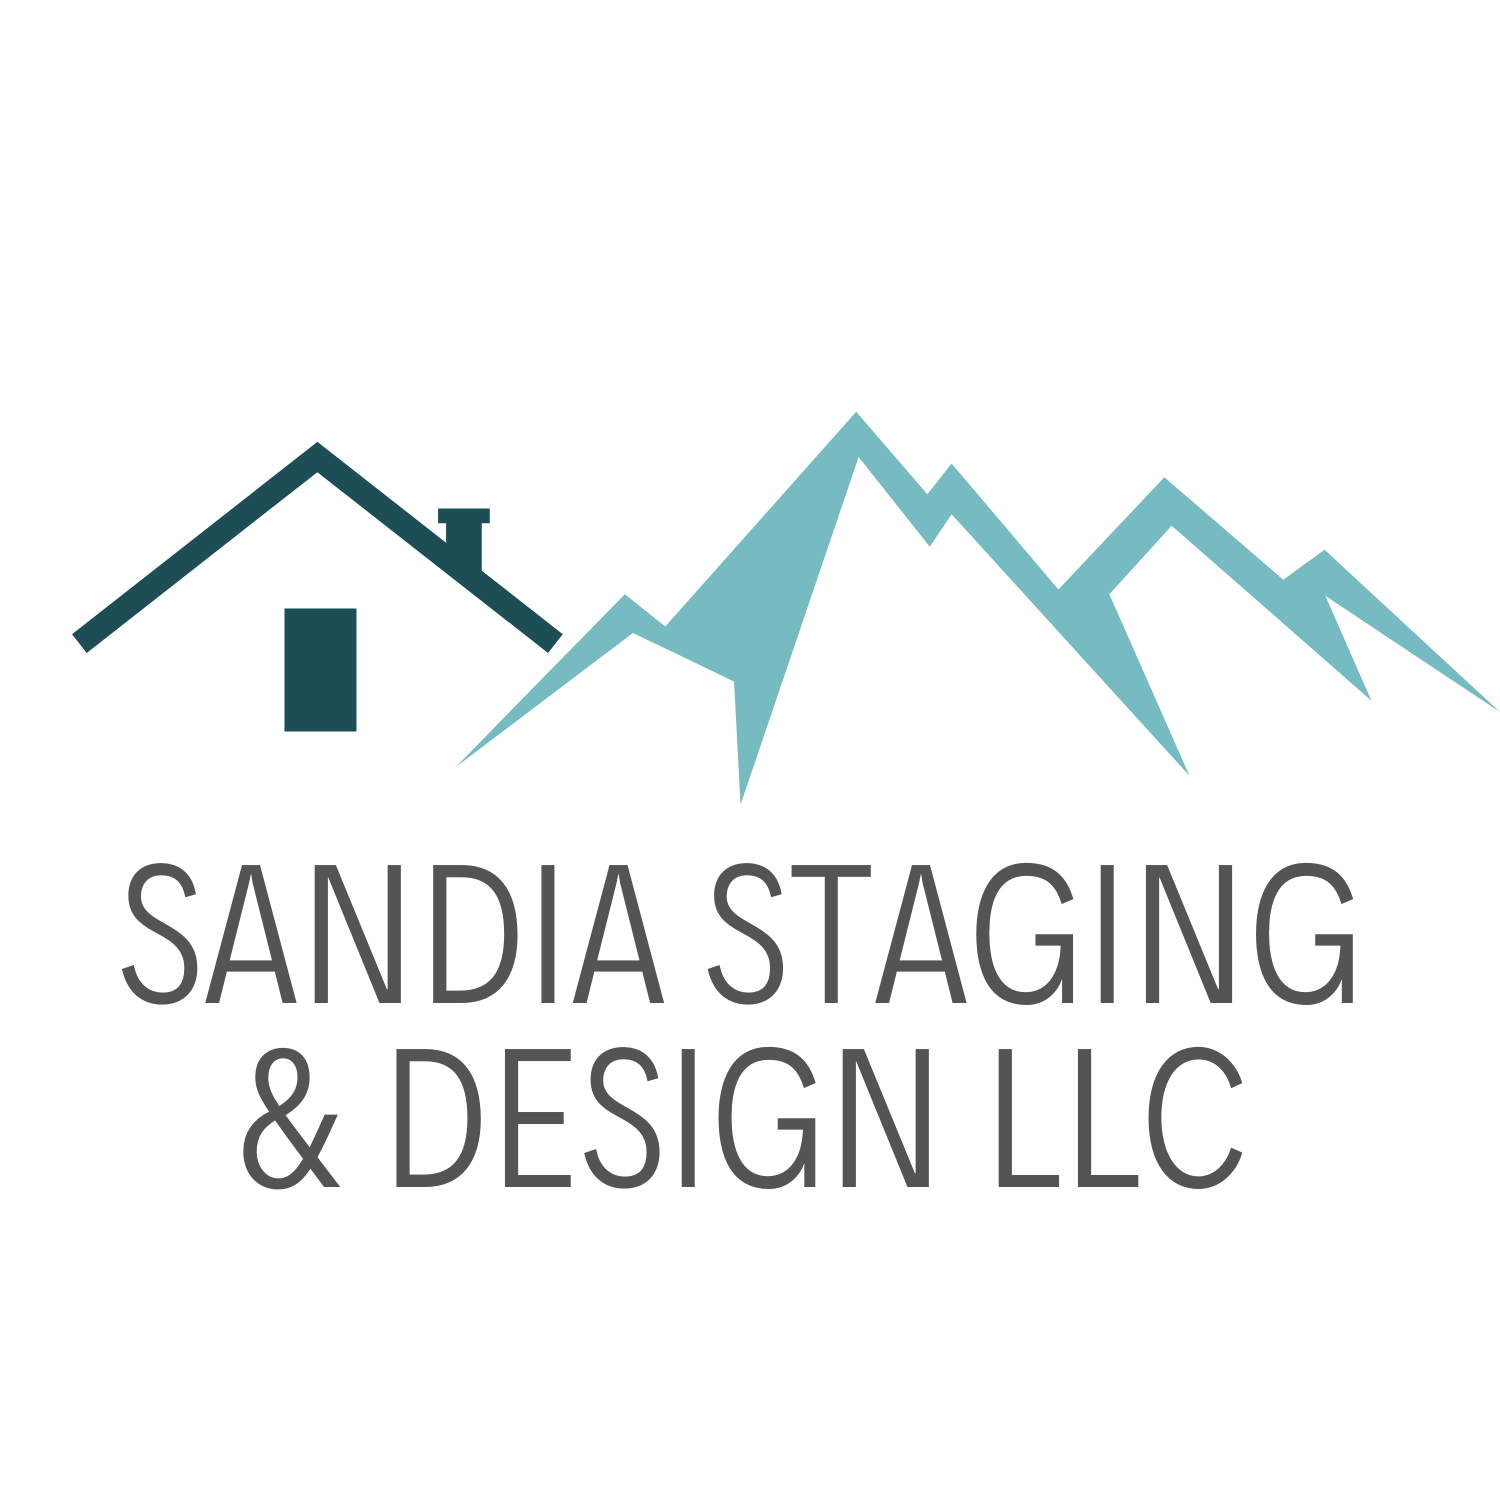 Sandia Staging and Design LLC logo